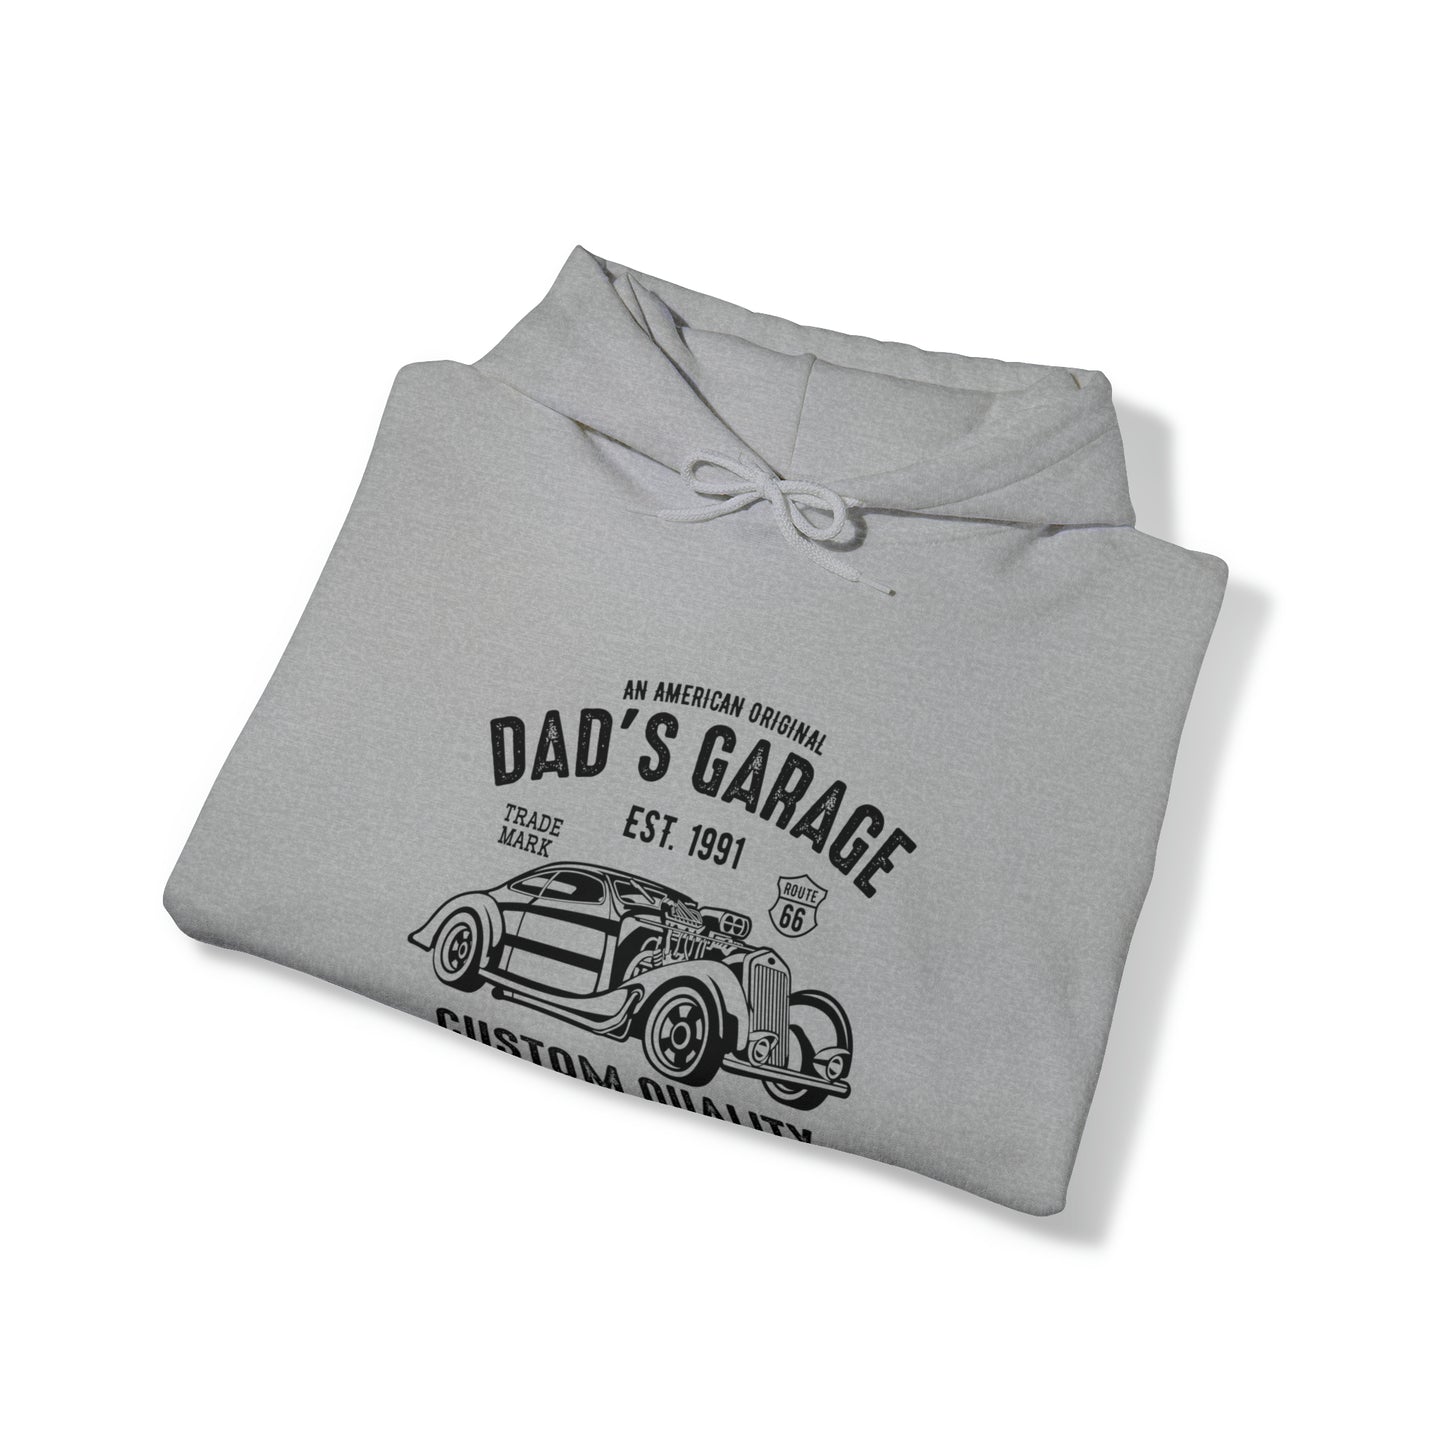 Dad's Garage Heavy Blend™ Hooded Sweatshirt